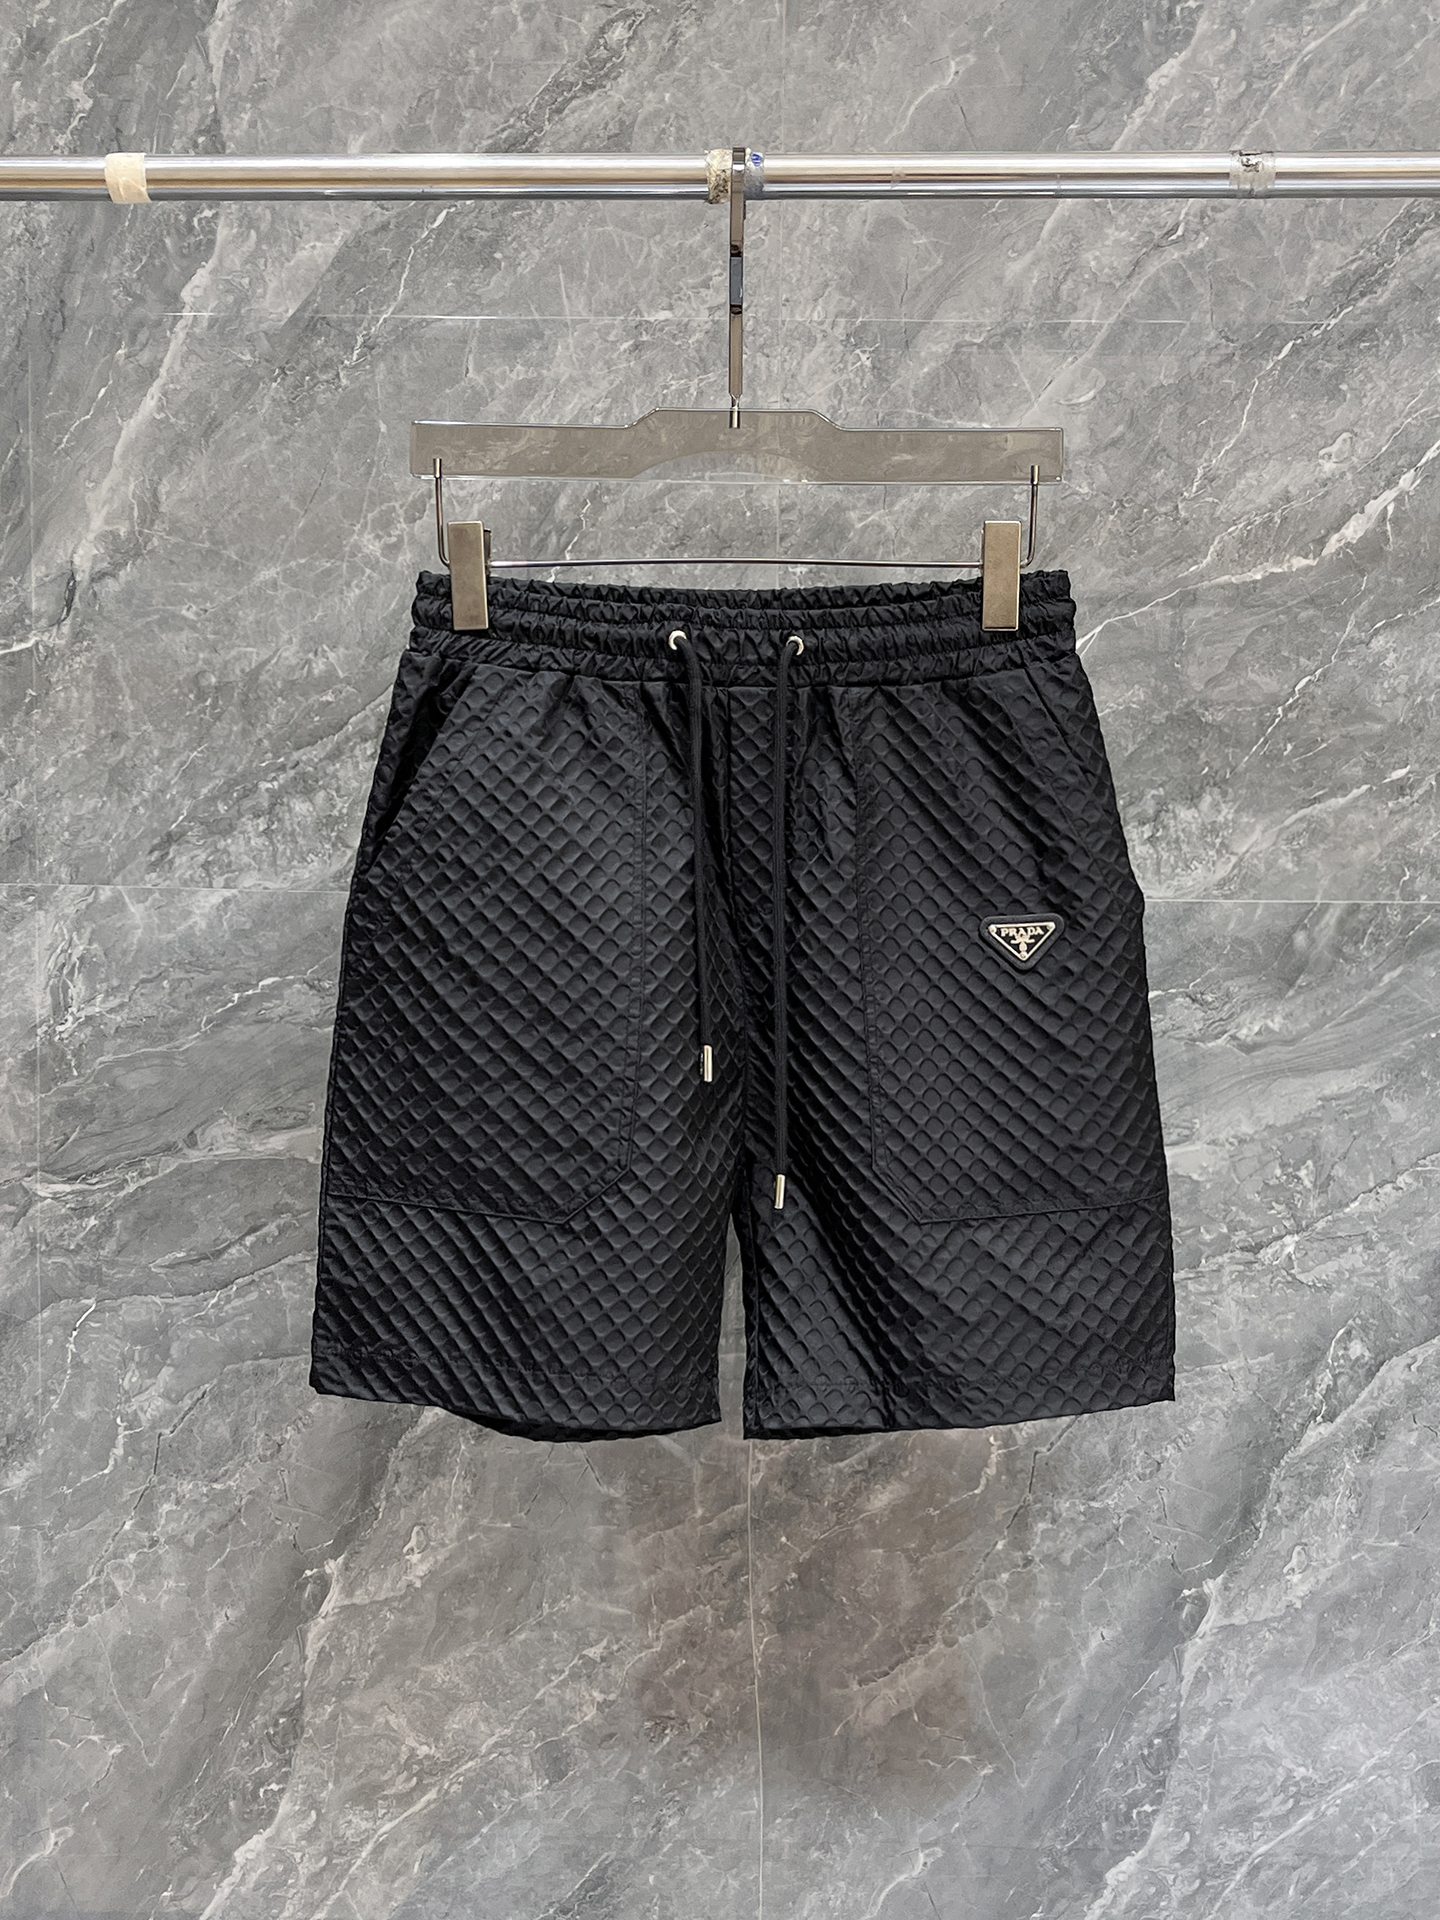 High Quality Designer
 Prada Clothing Shorts Men Summer Collection Casual